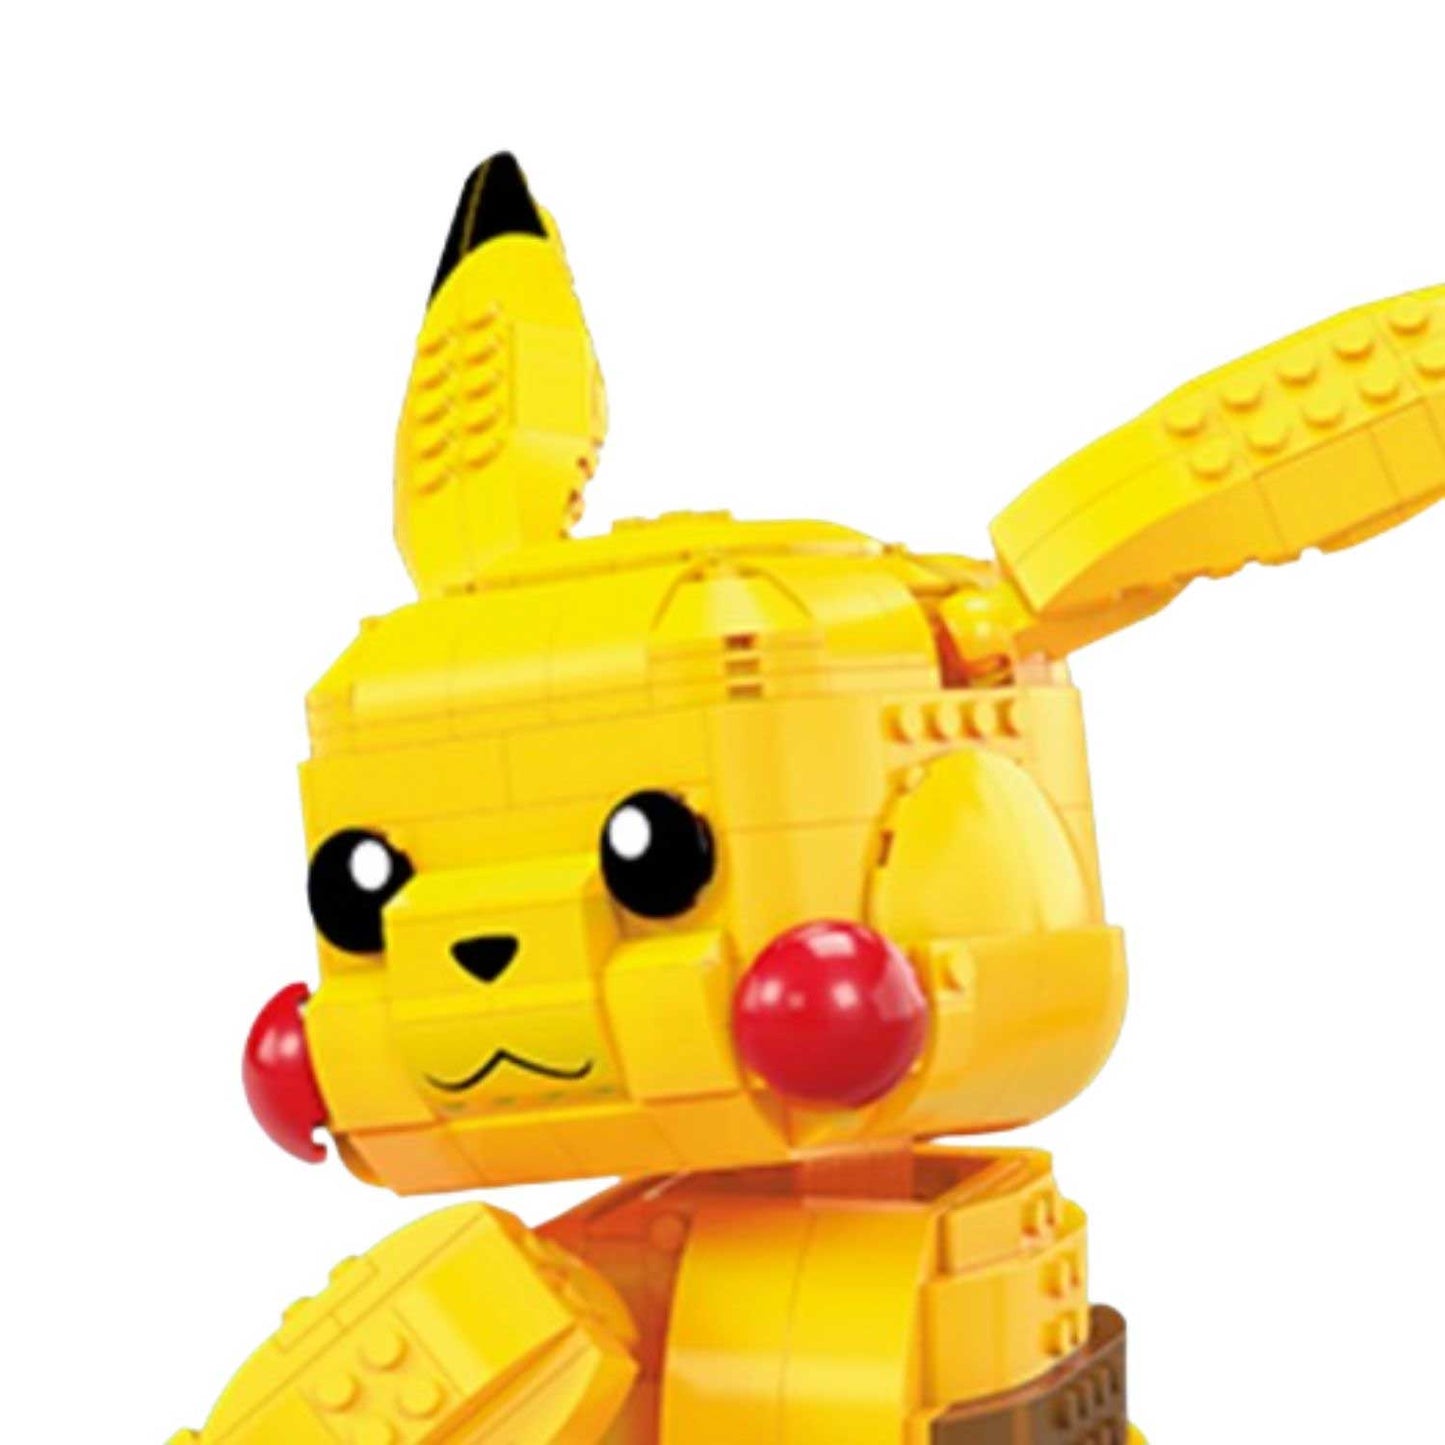 Mattel - Mega Bloks Pokémon Pikachu Gigante FVK81